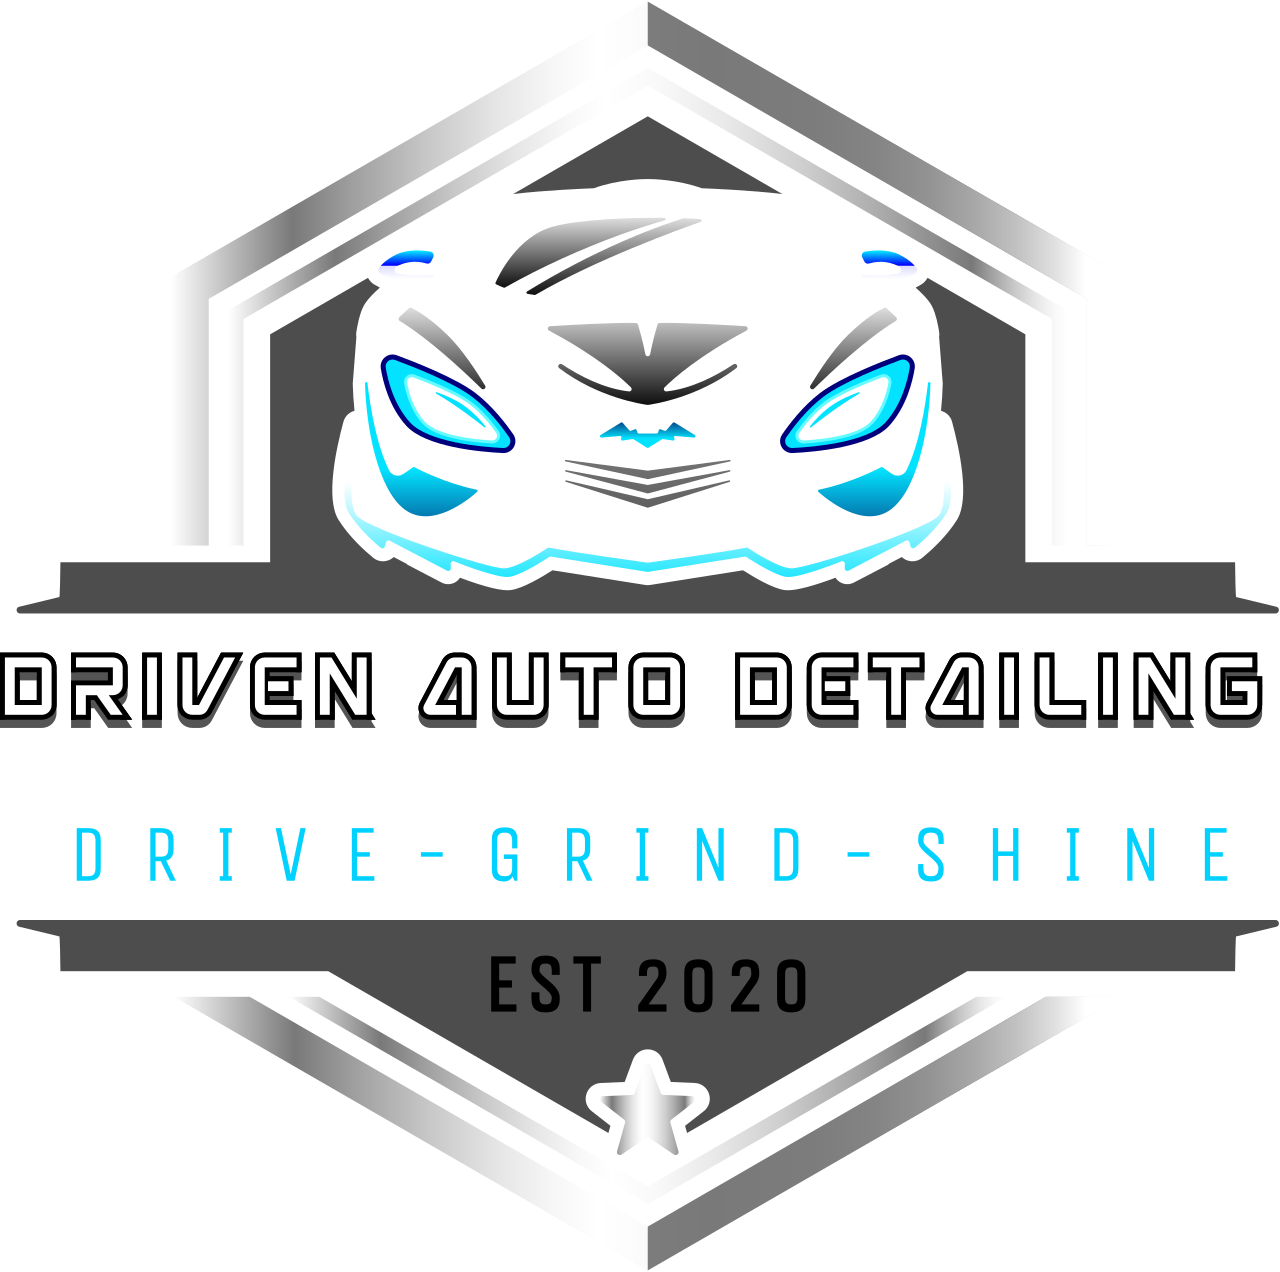 Driven Auto detailing 's logo